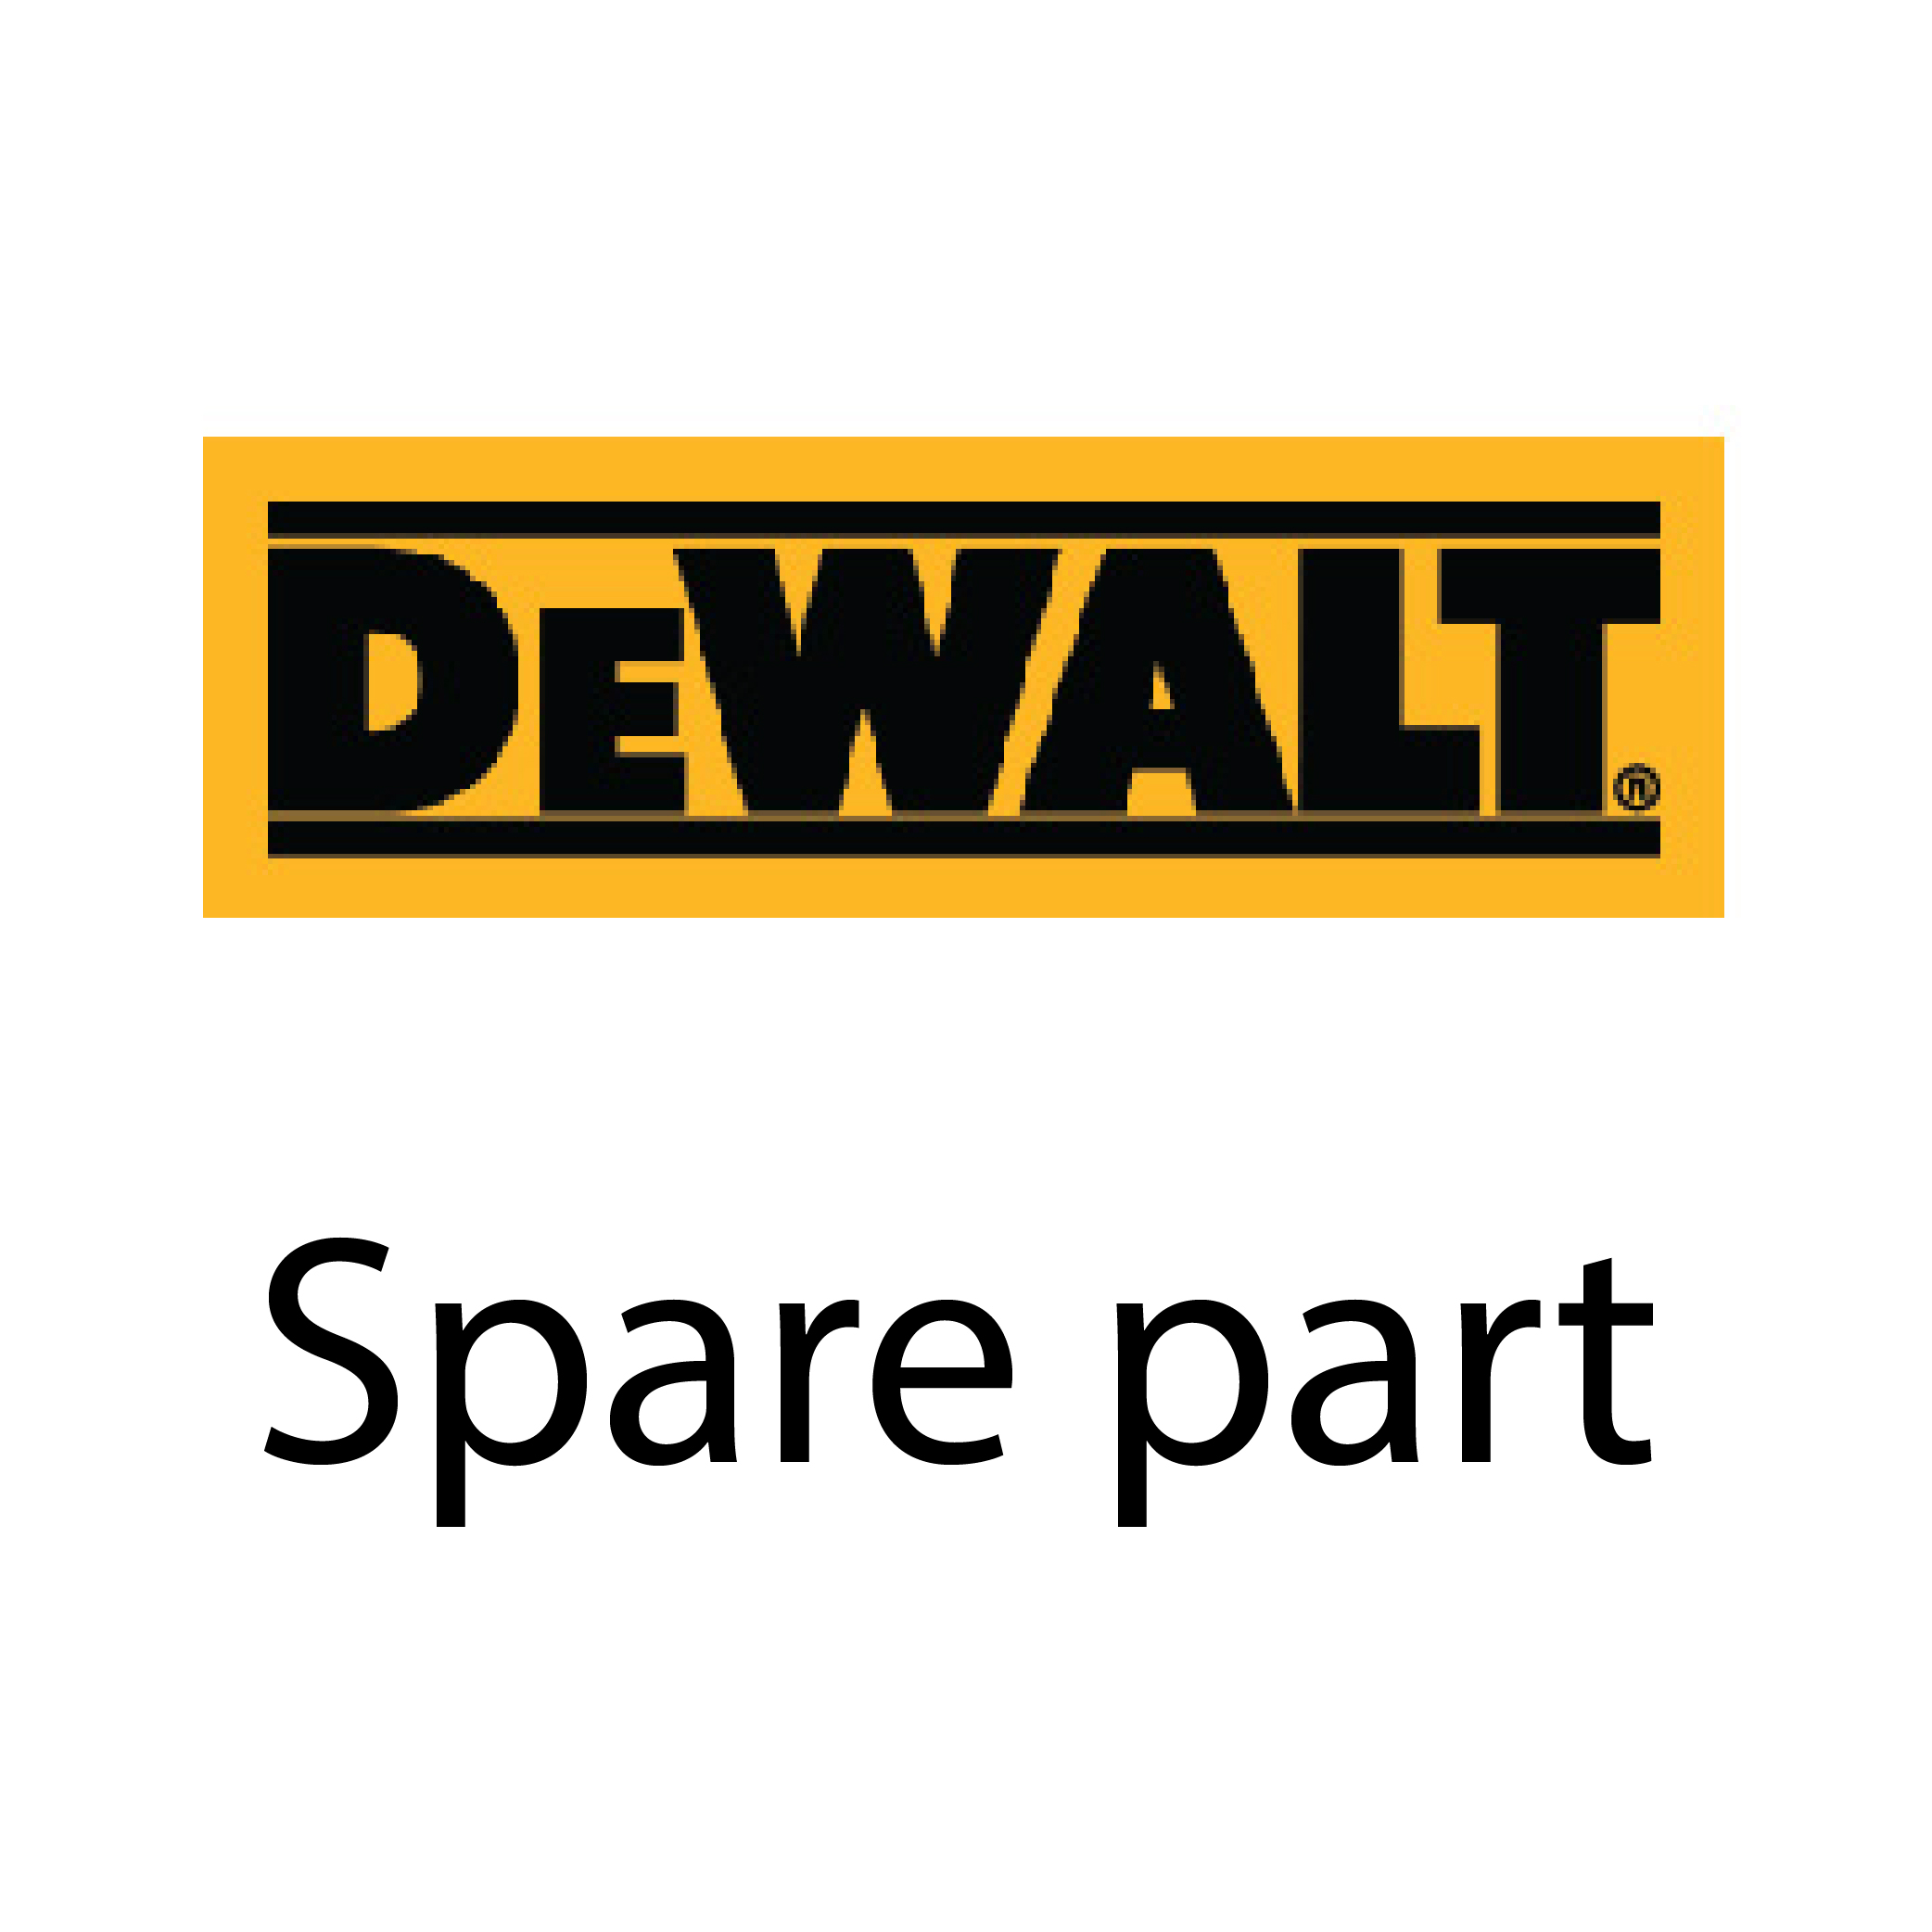 SKI - สกี จำหน่ายสินค้าหลากหลาย และคุณภาพดี | DEWALT #397701-00 #137 Support Switch,รุ่น DW810